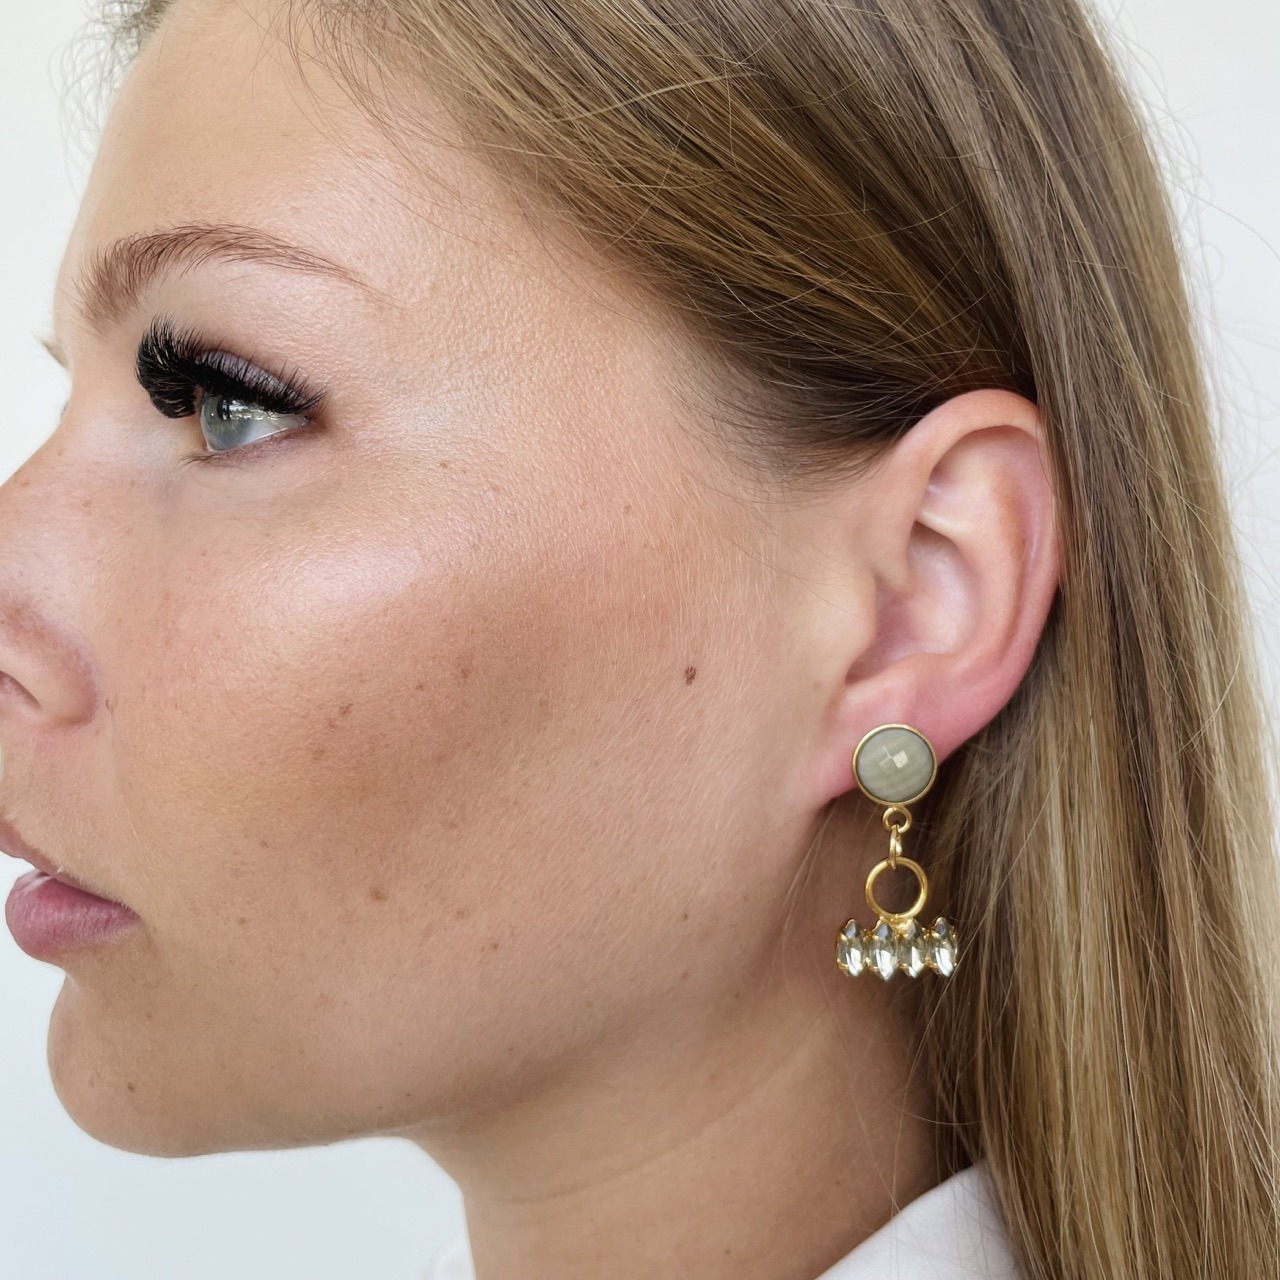 Lena neutral short earrings